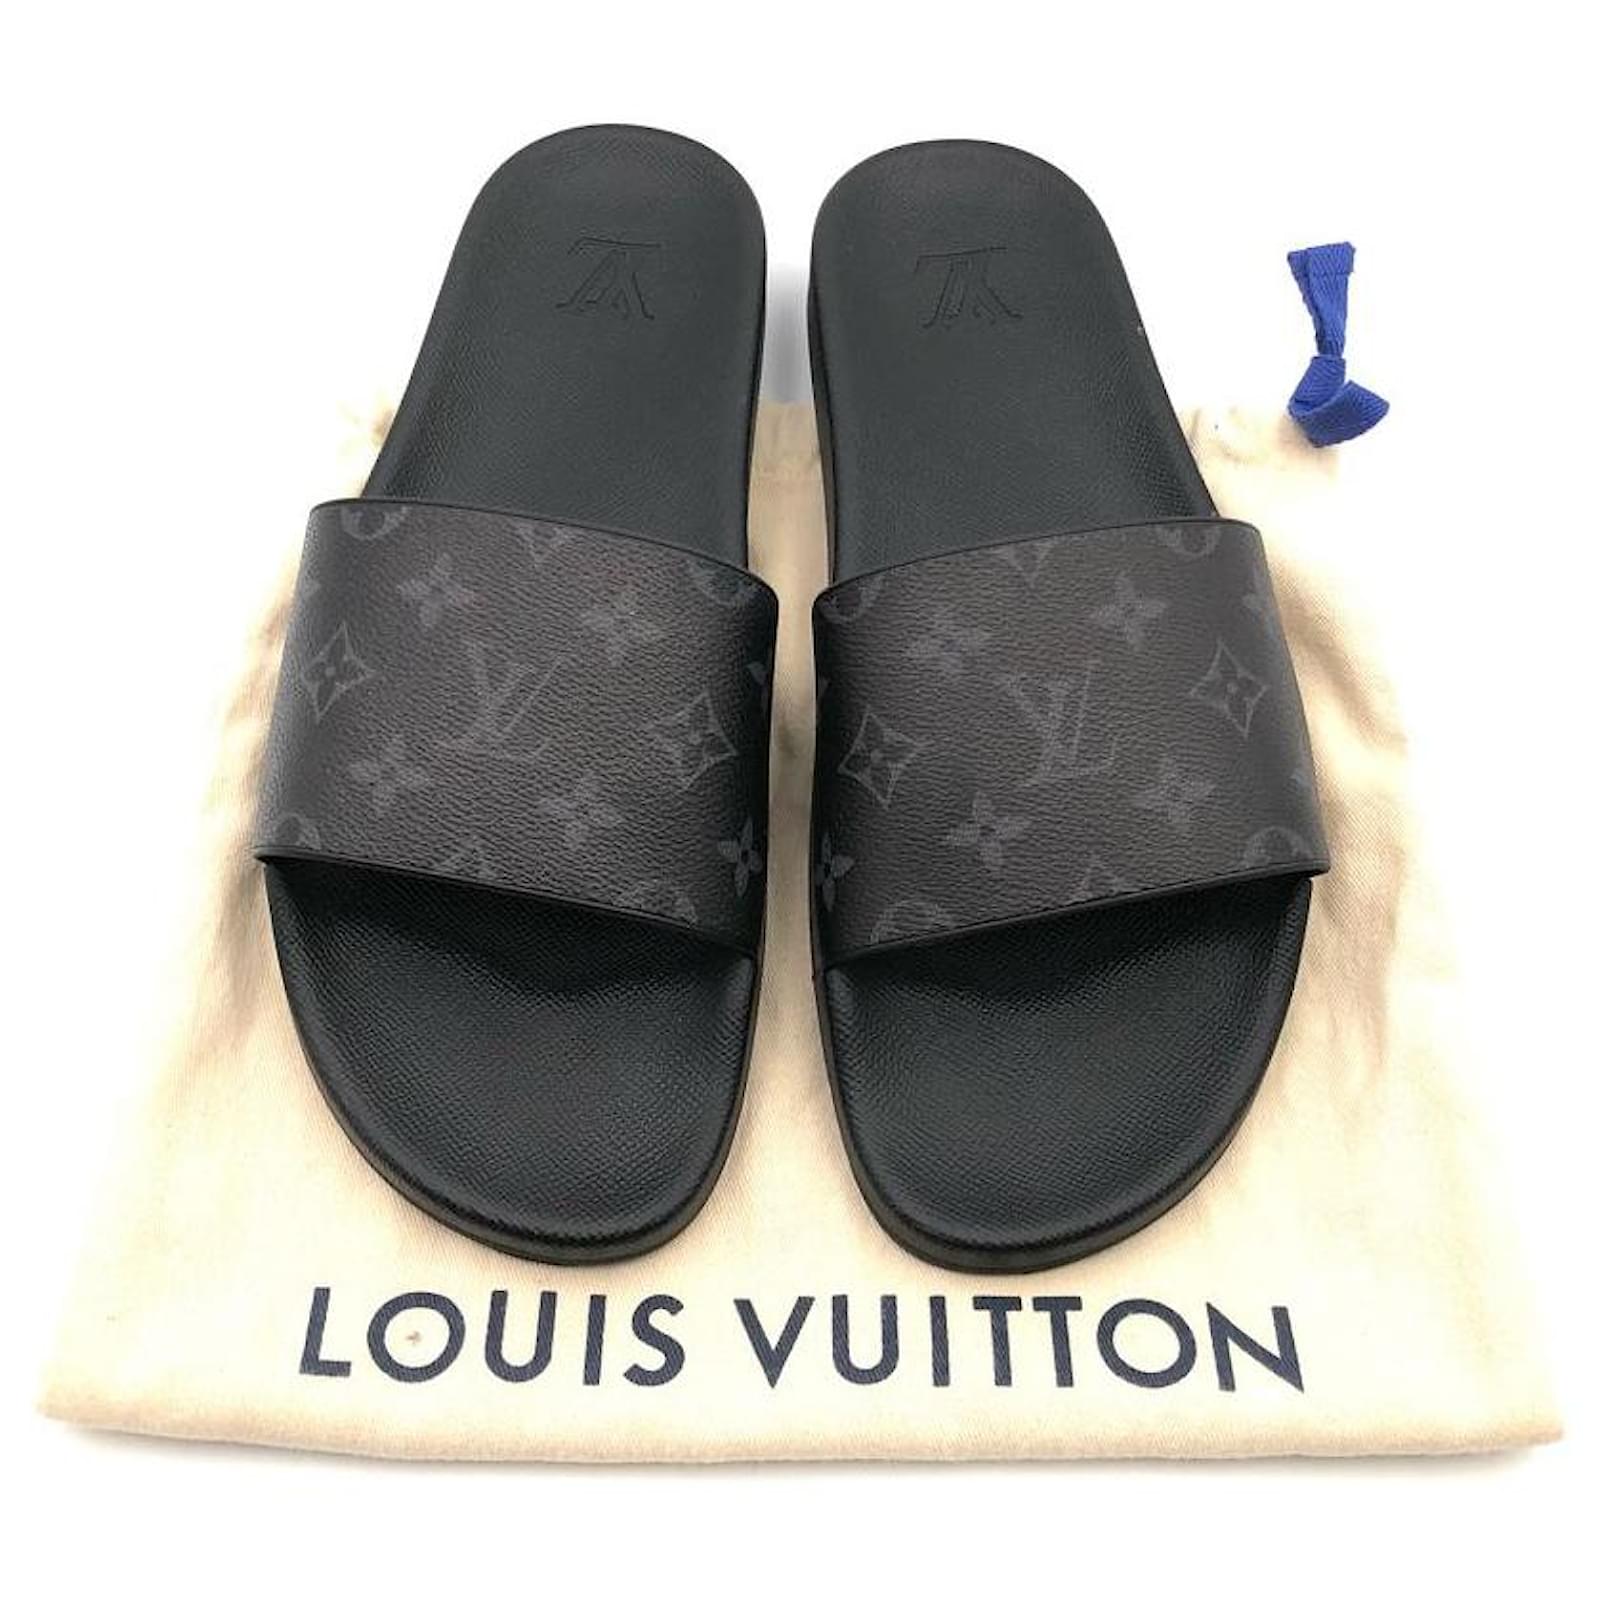 Le ciabatte Waterfront di Louis Vuitton